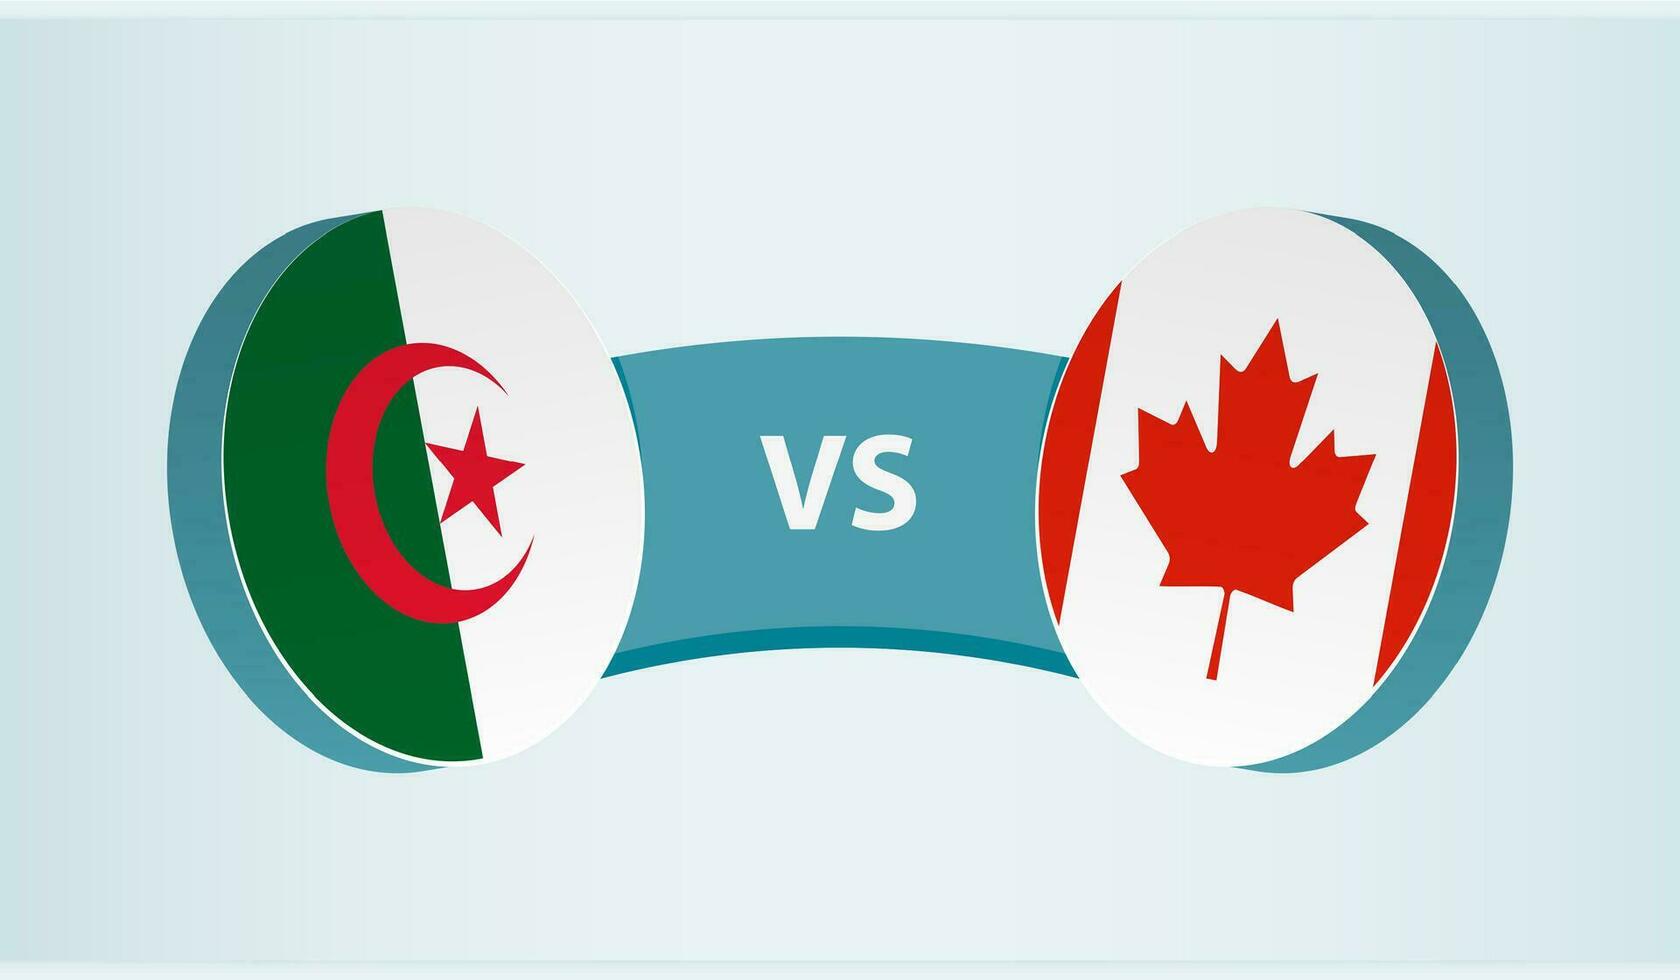 algeriet mot Kanada, team sporter konkurrens begrepp. vektor